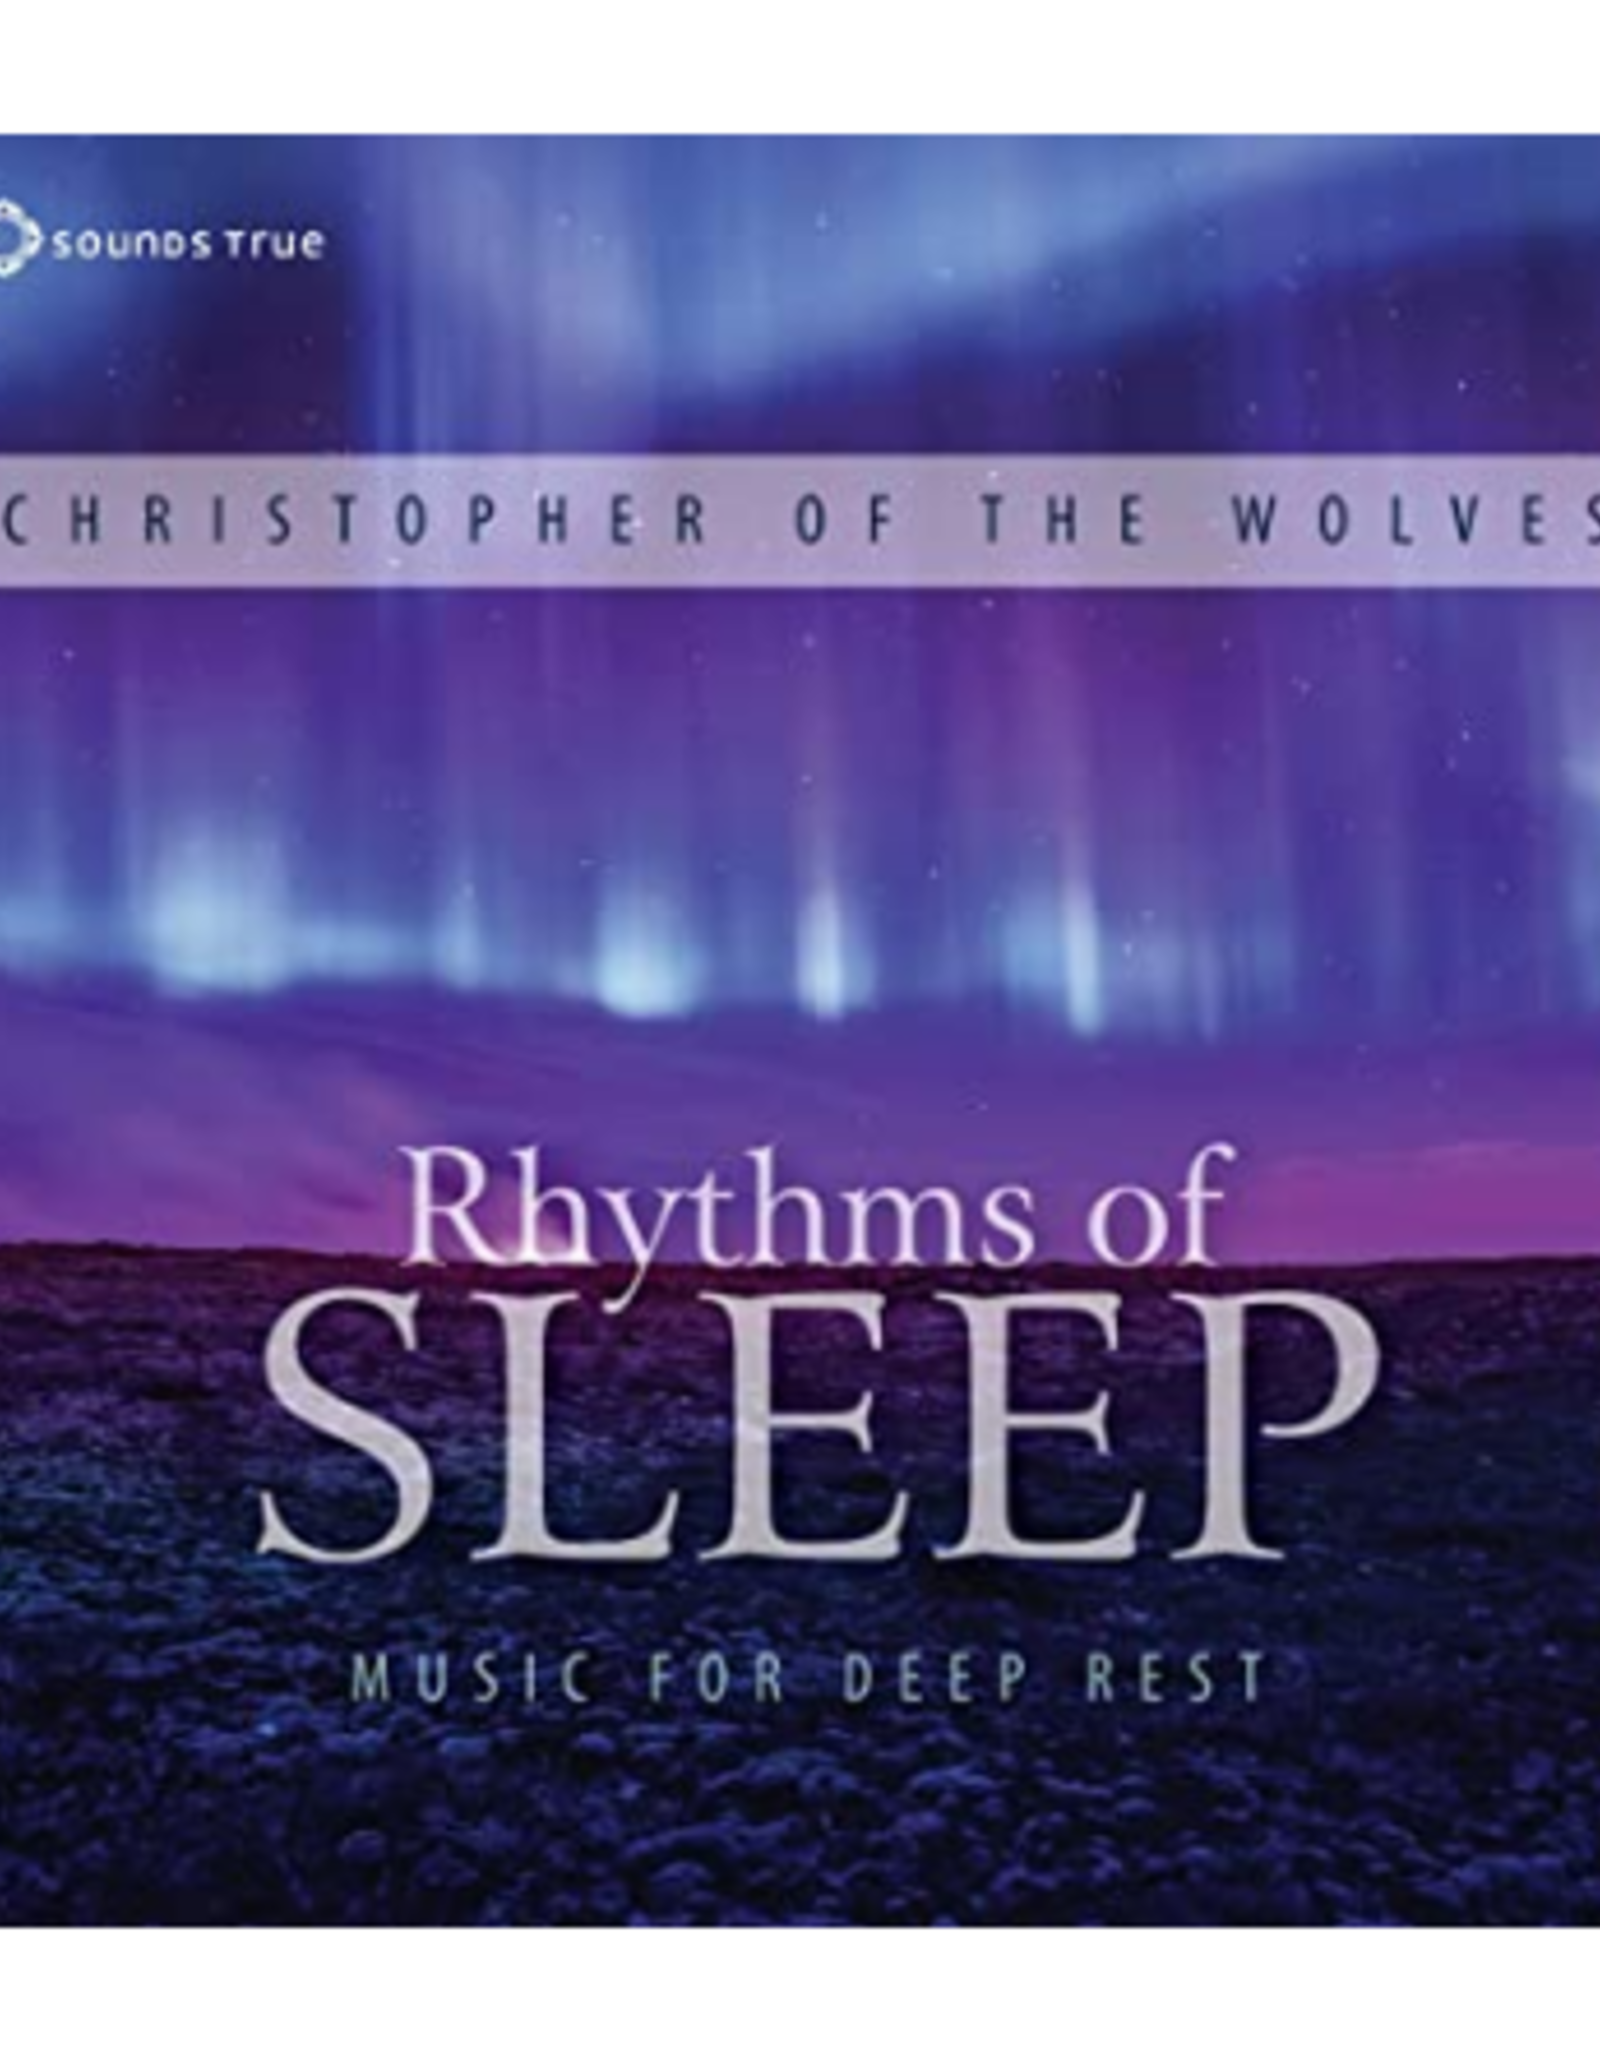 Christopher of the Wolves Rhythms of Sleep CD by Christopher of the Wolves